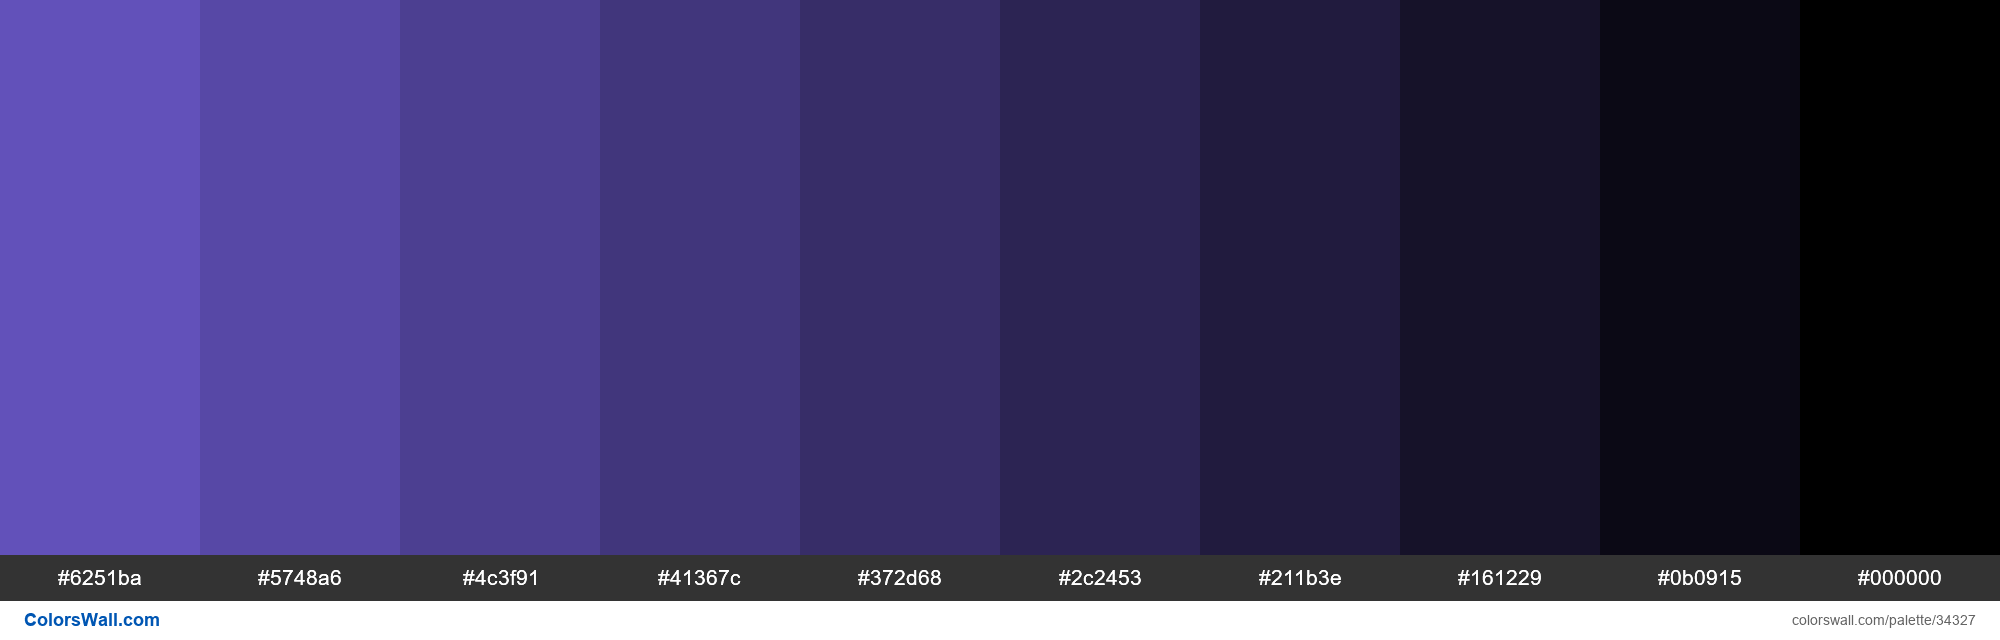 https://colorswall.com/images/palettes/shades-xkcd-color-light-indigo-6d5acf-hex-34327-colorswall.png